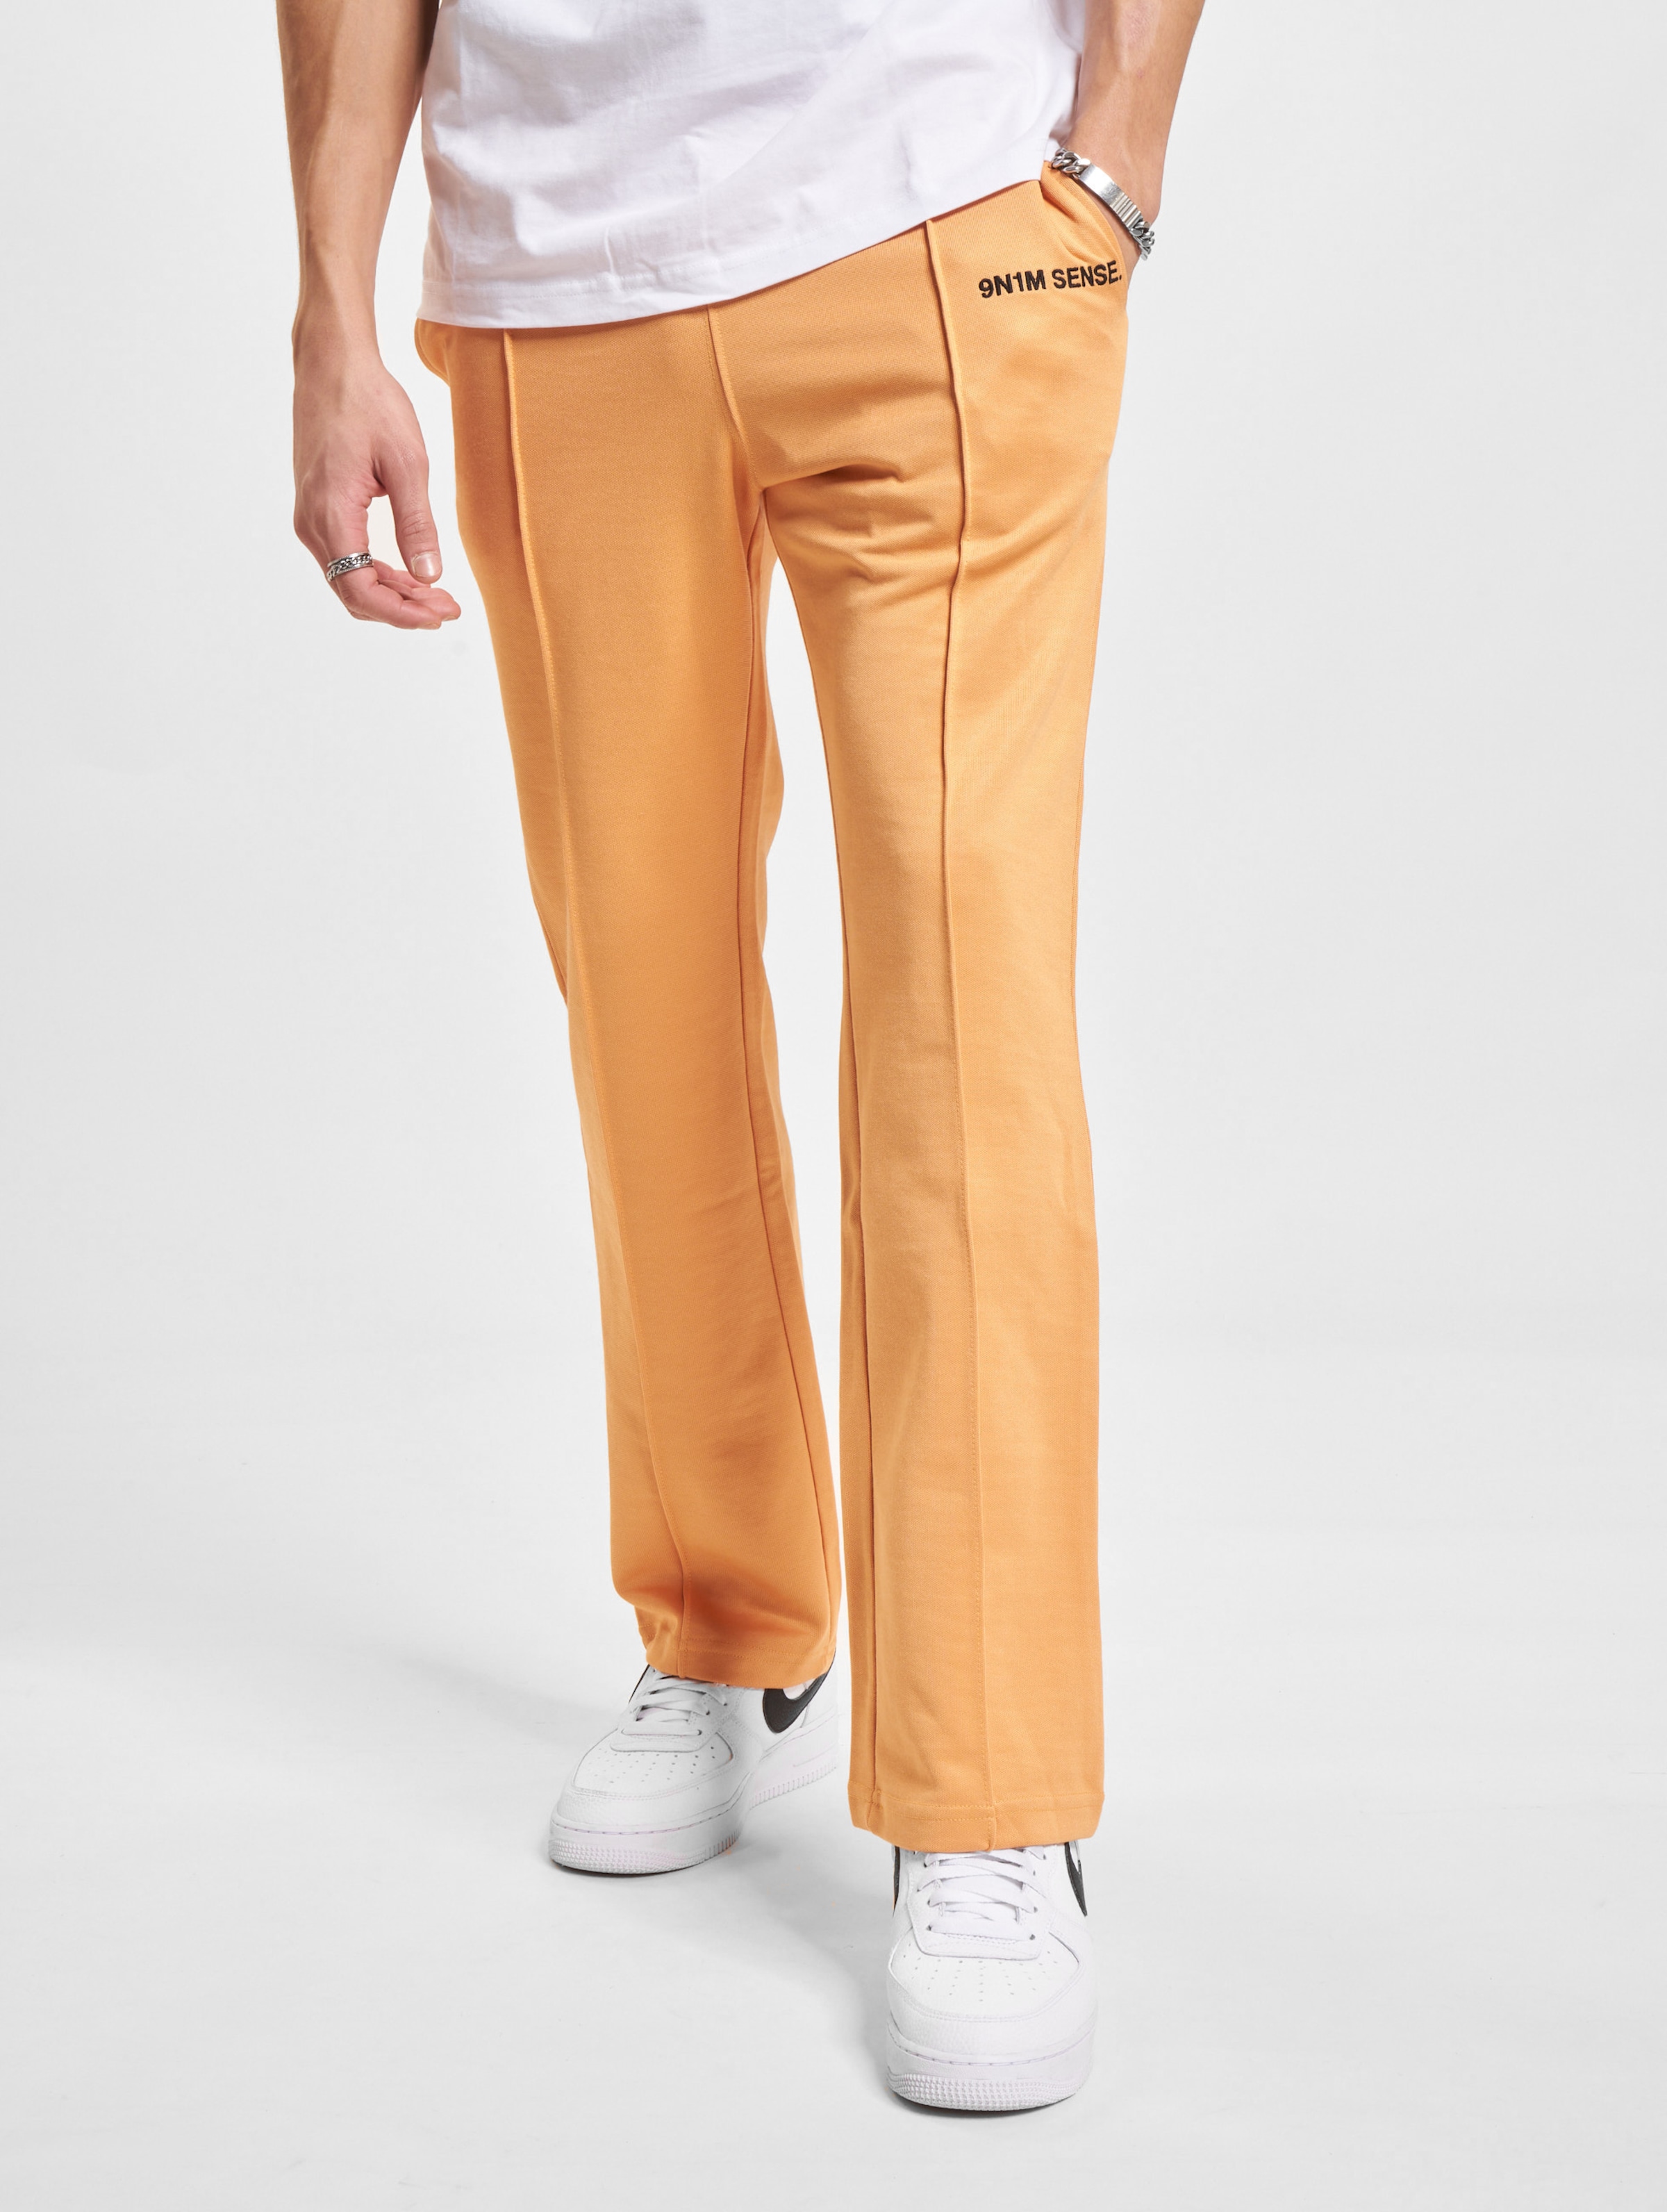 9N1M SENSE Velour Trackpants Mannen op kleur oranje, Maat XS